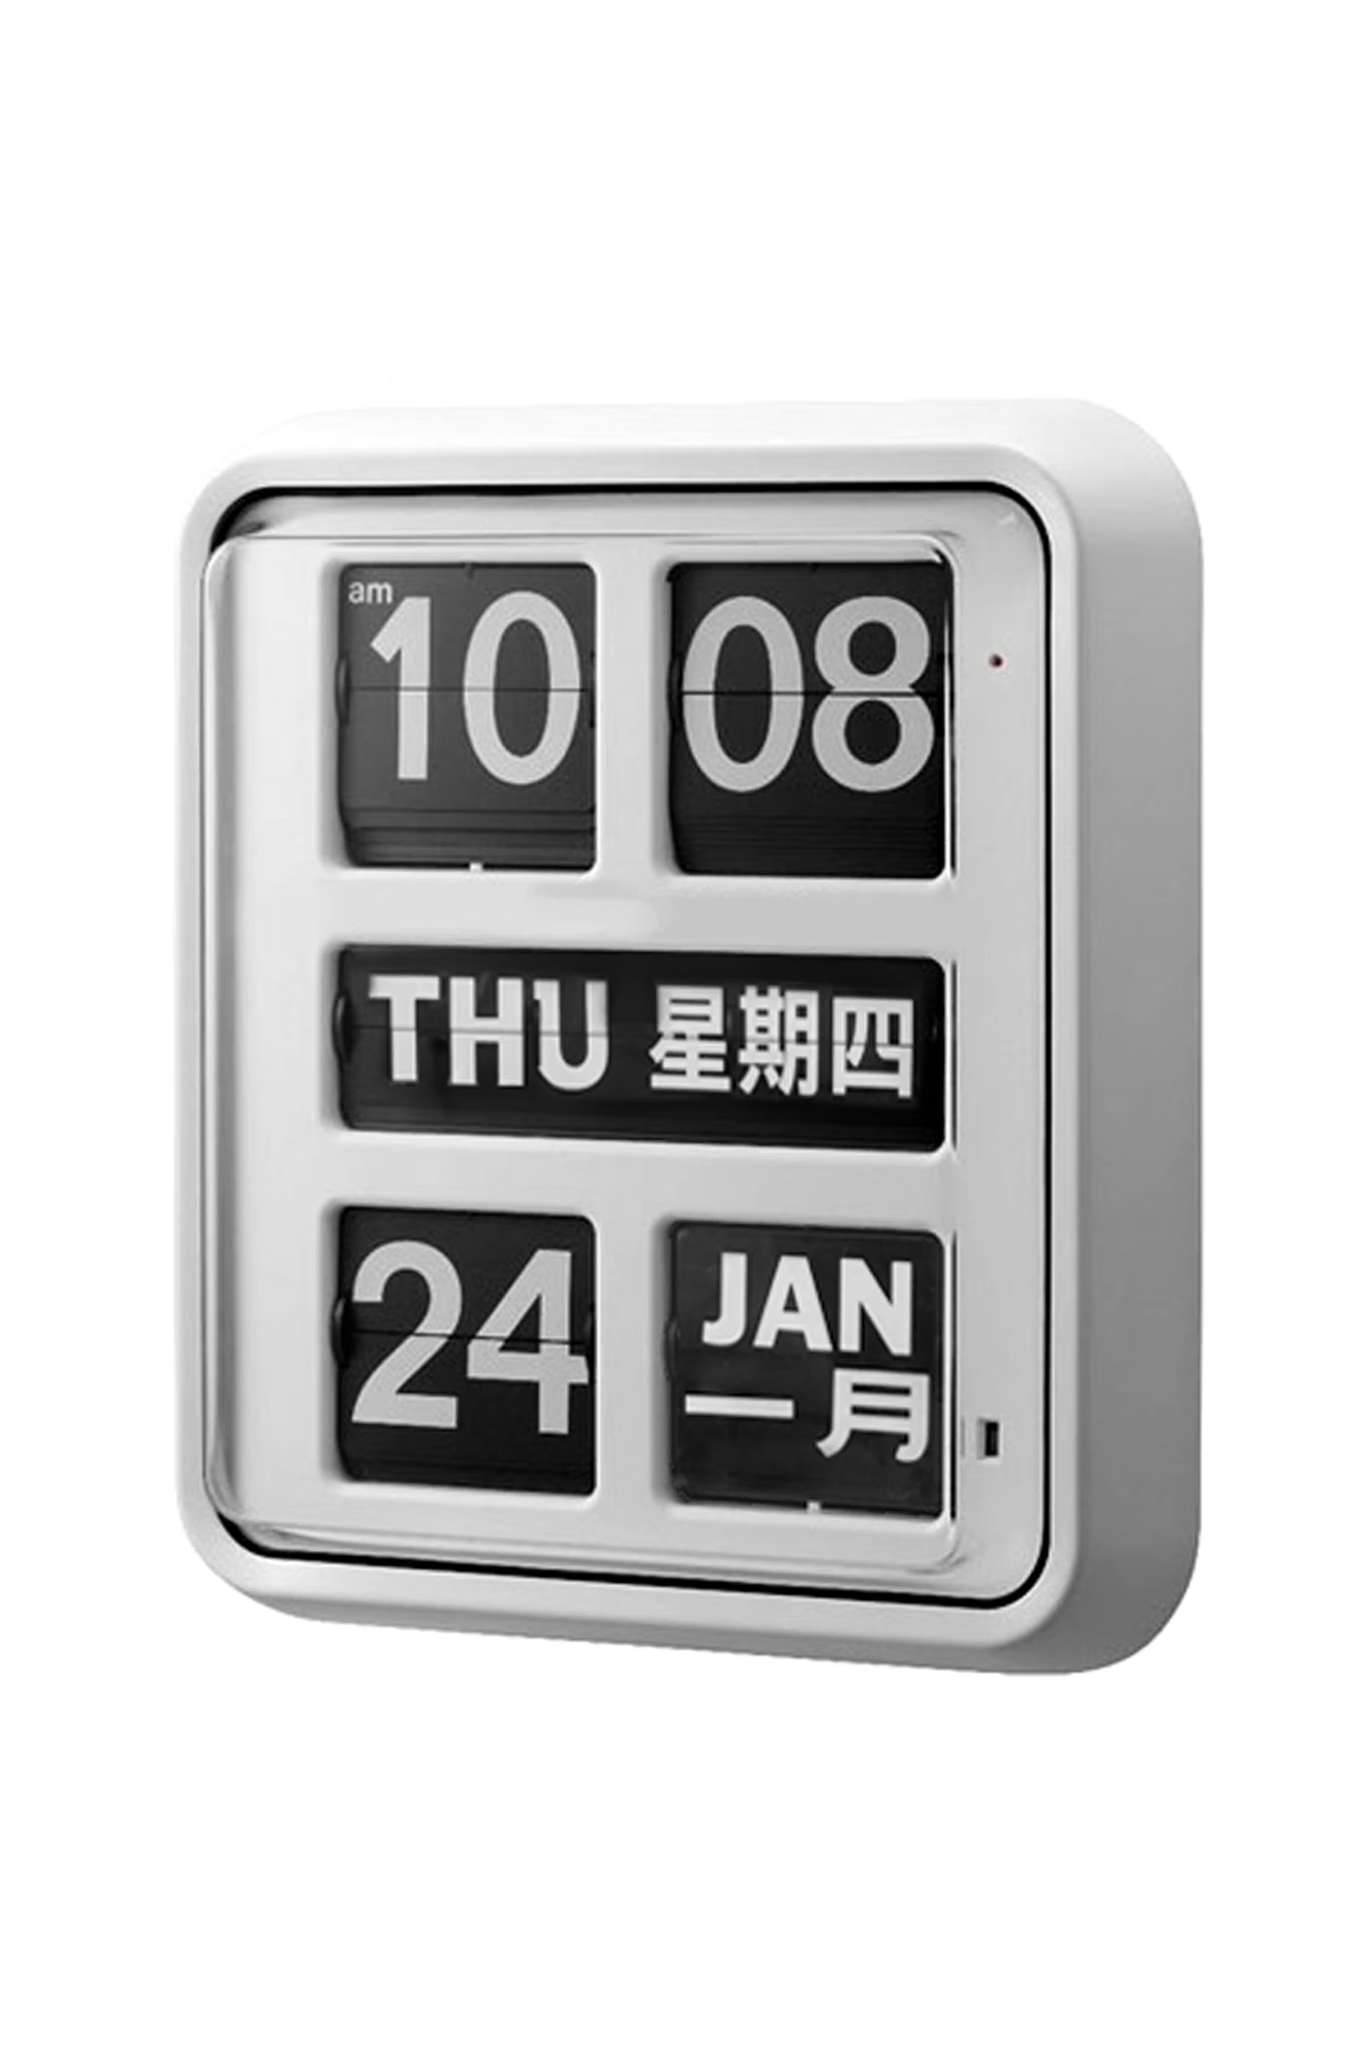 TWEMCO Calendar Wall Flip Clock BQ-1700 (PRE-ORDER)